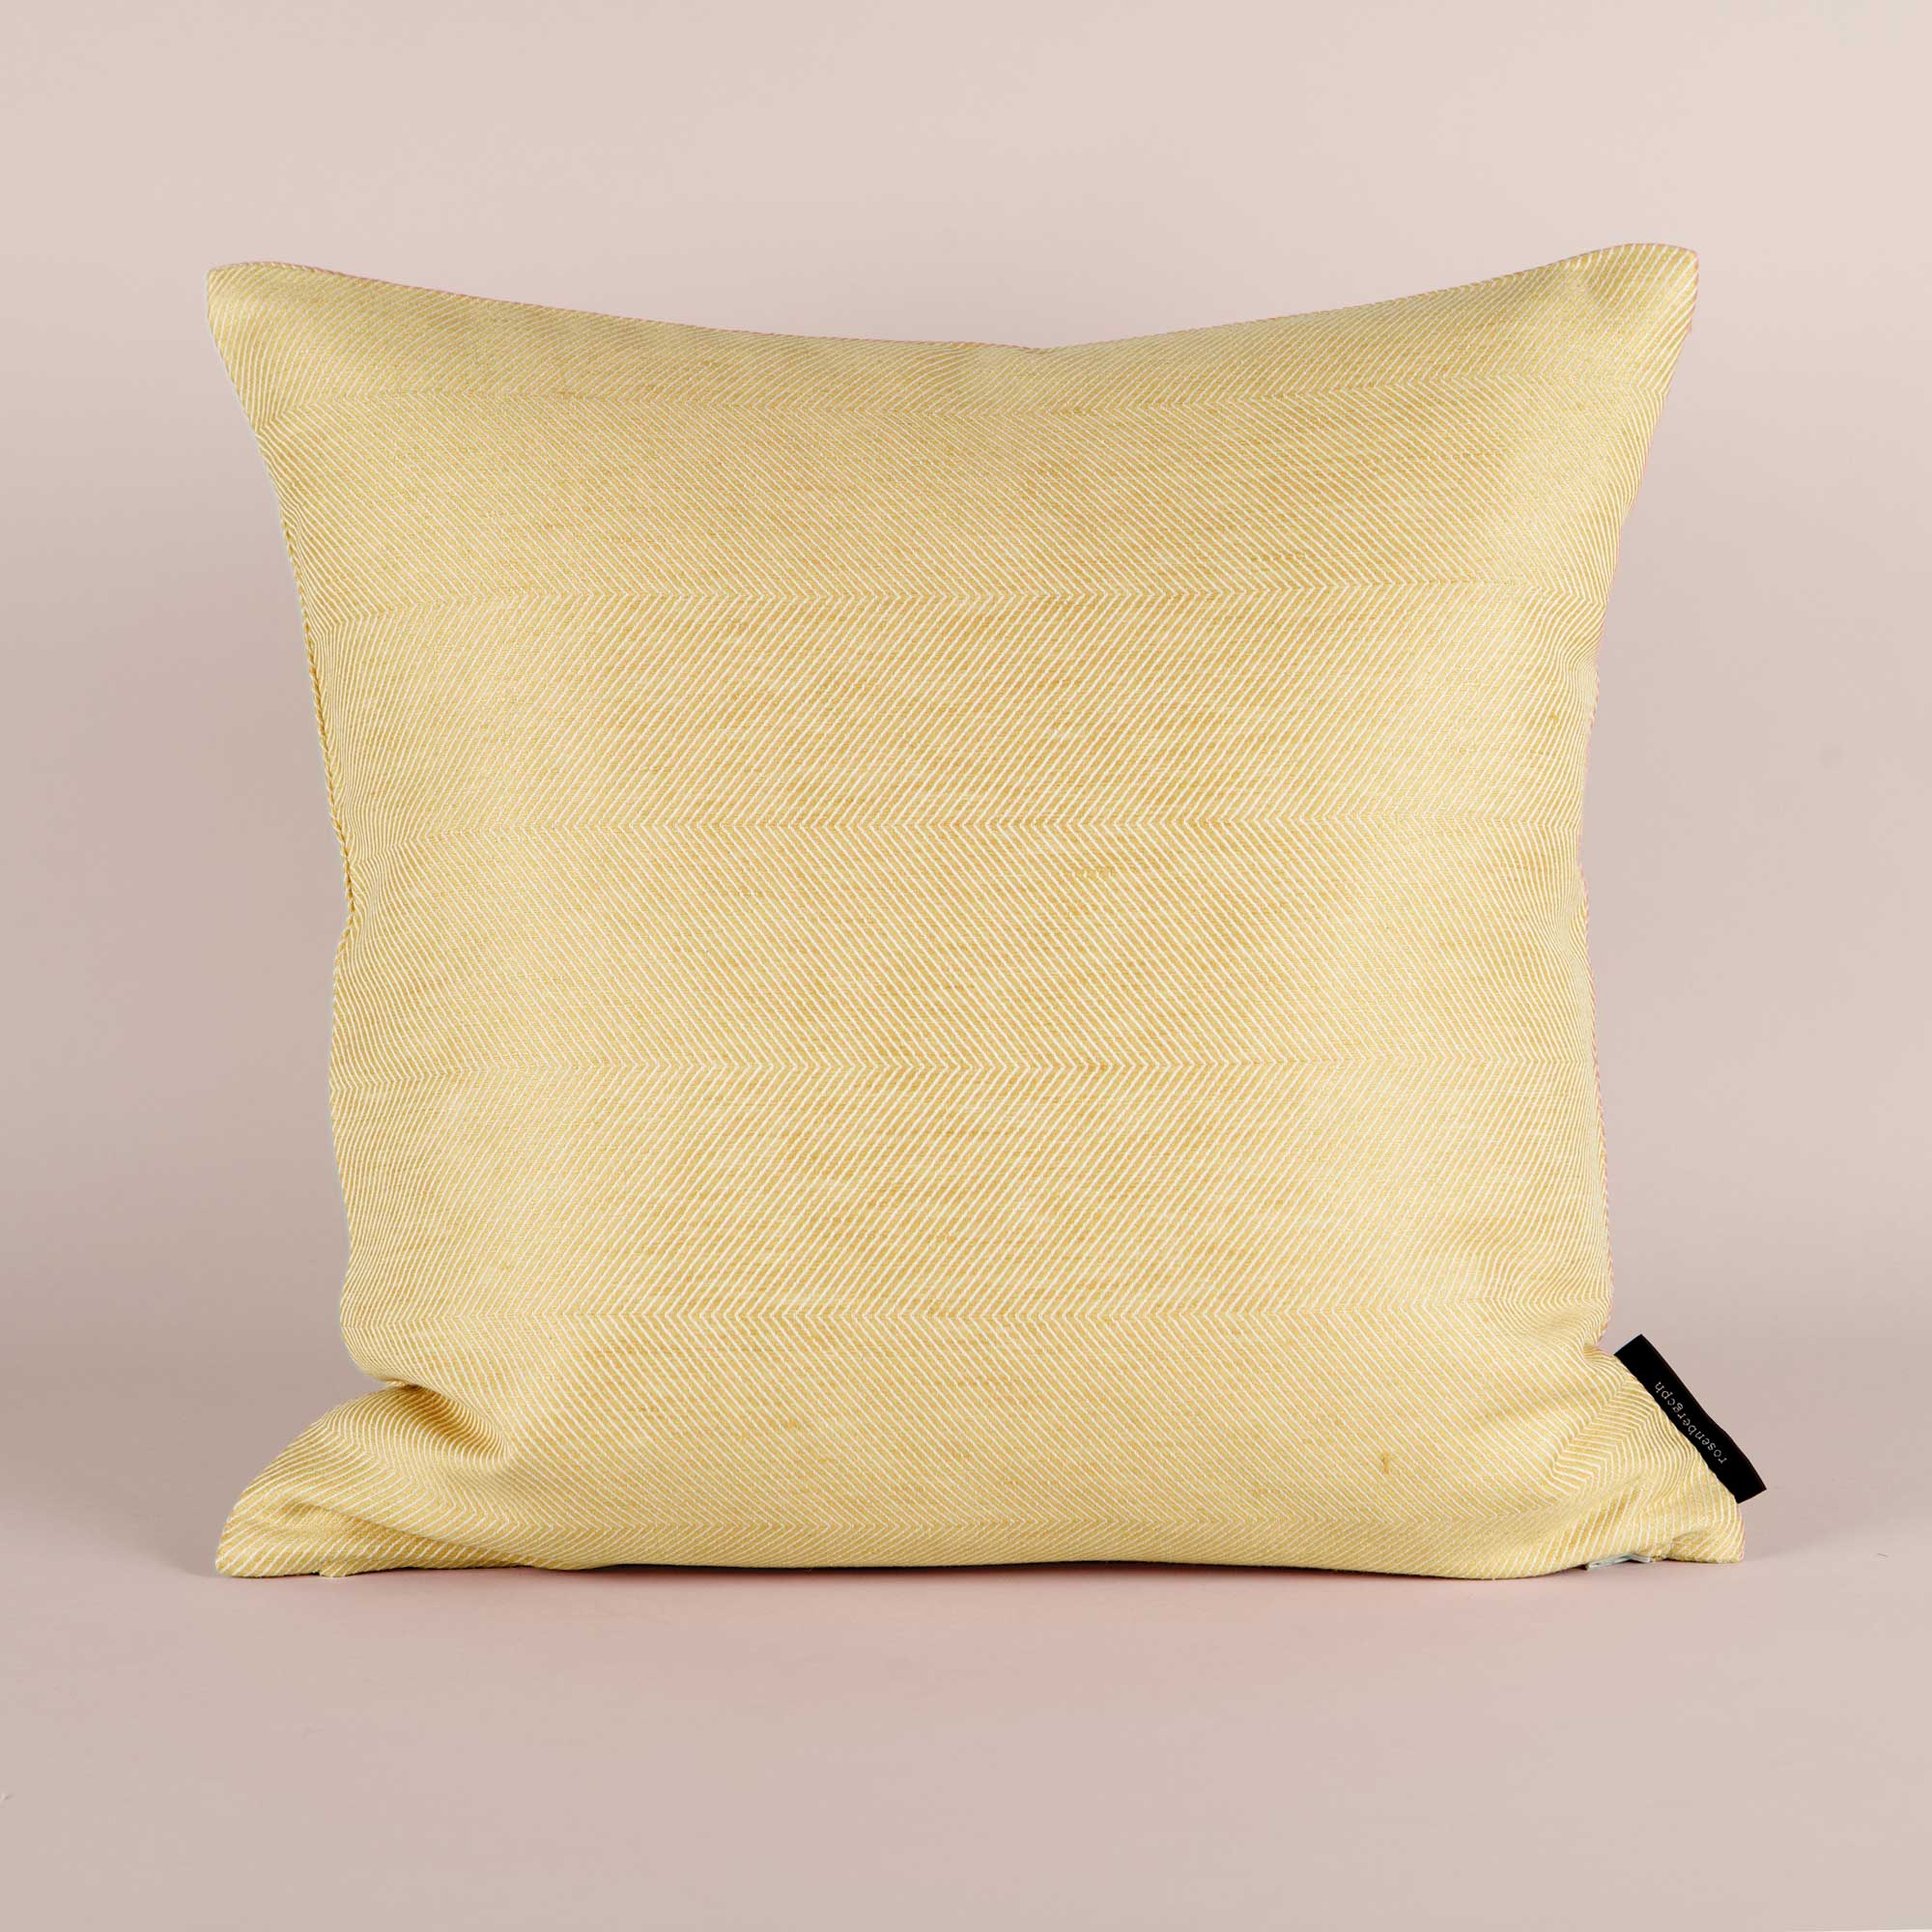 Square cushion linen/cotton hay yellow design by Anne Rosenberg, RosenbergCph